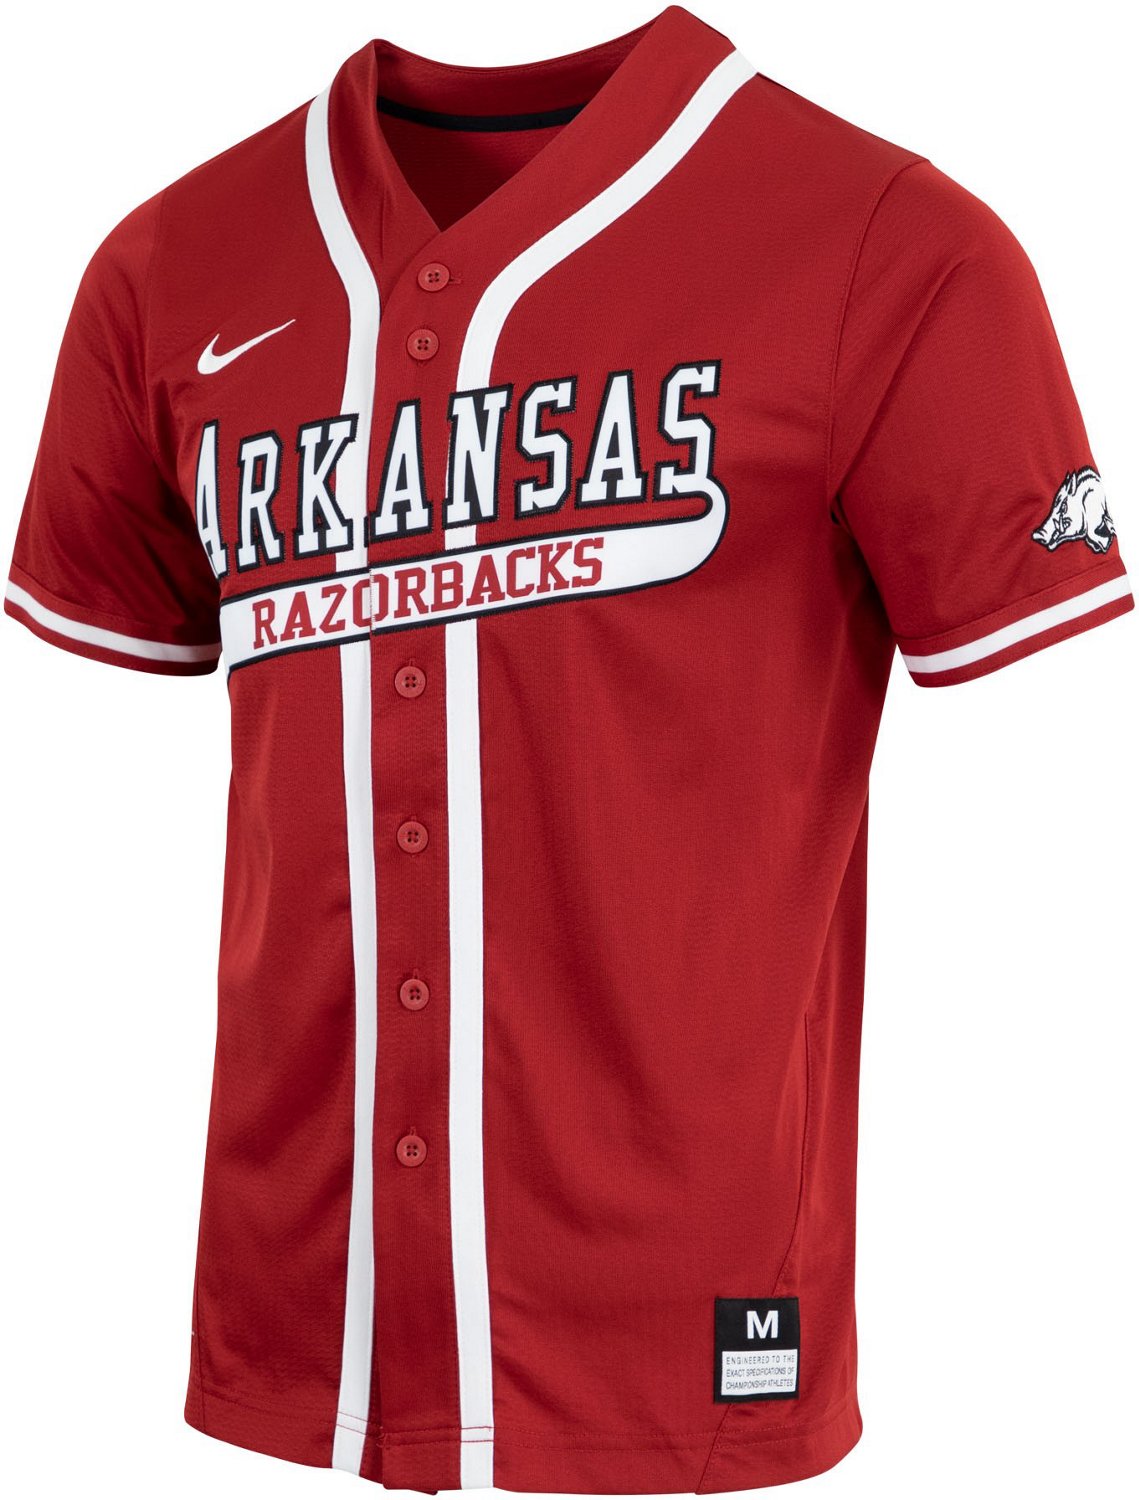 Arkansas Jerseys, Arkansas Jersey Deals, University of Arkansas Uniforms